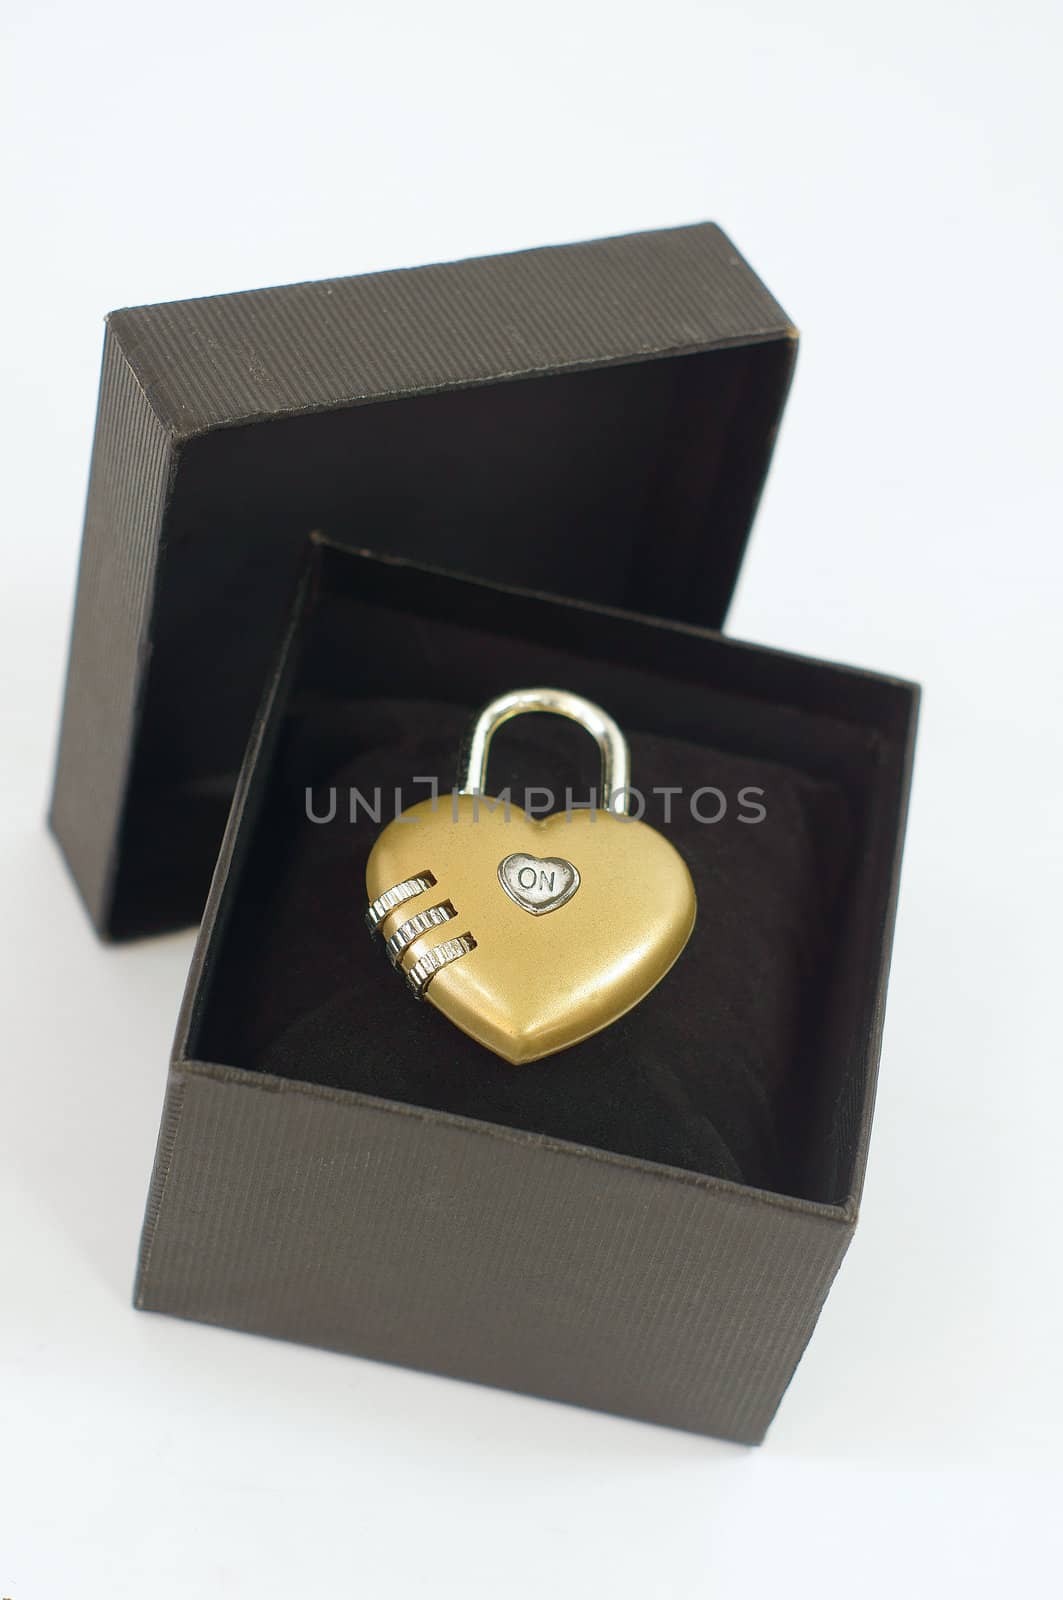 A heart shaped lock inside a gift box